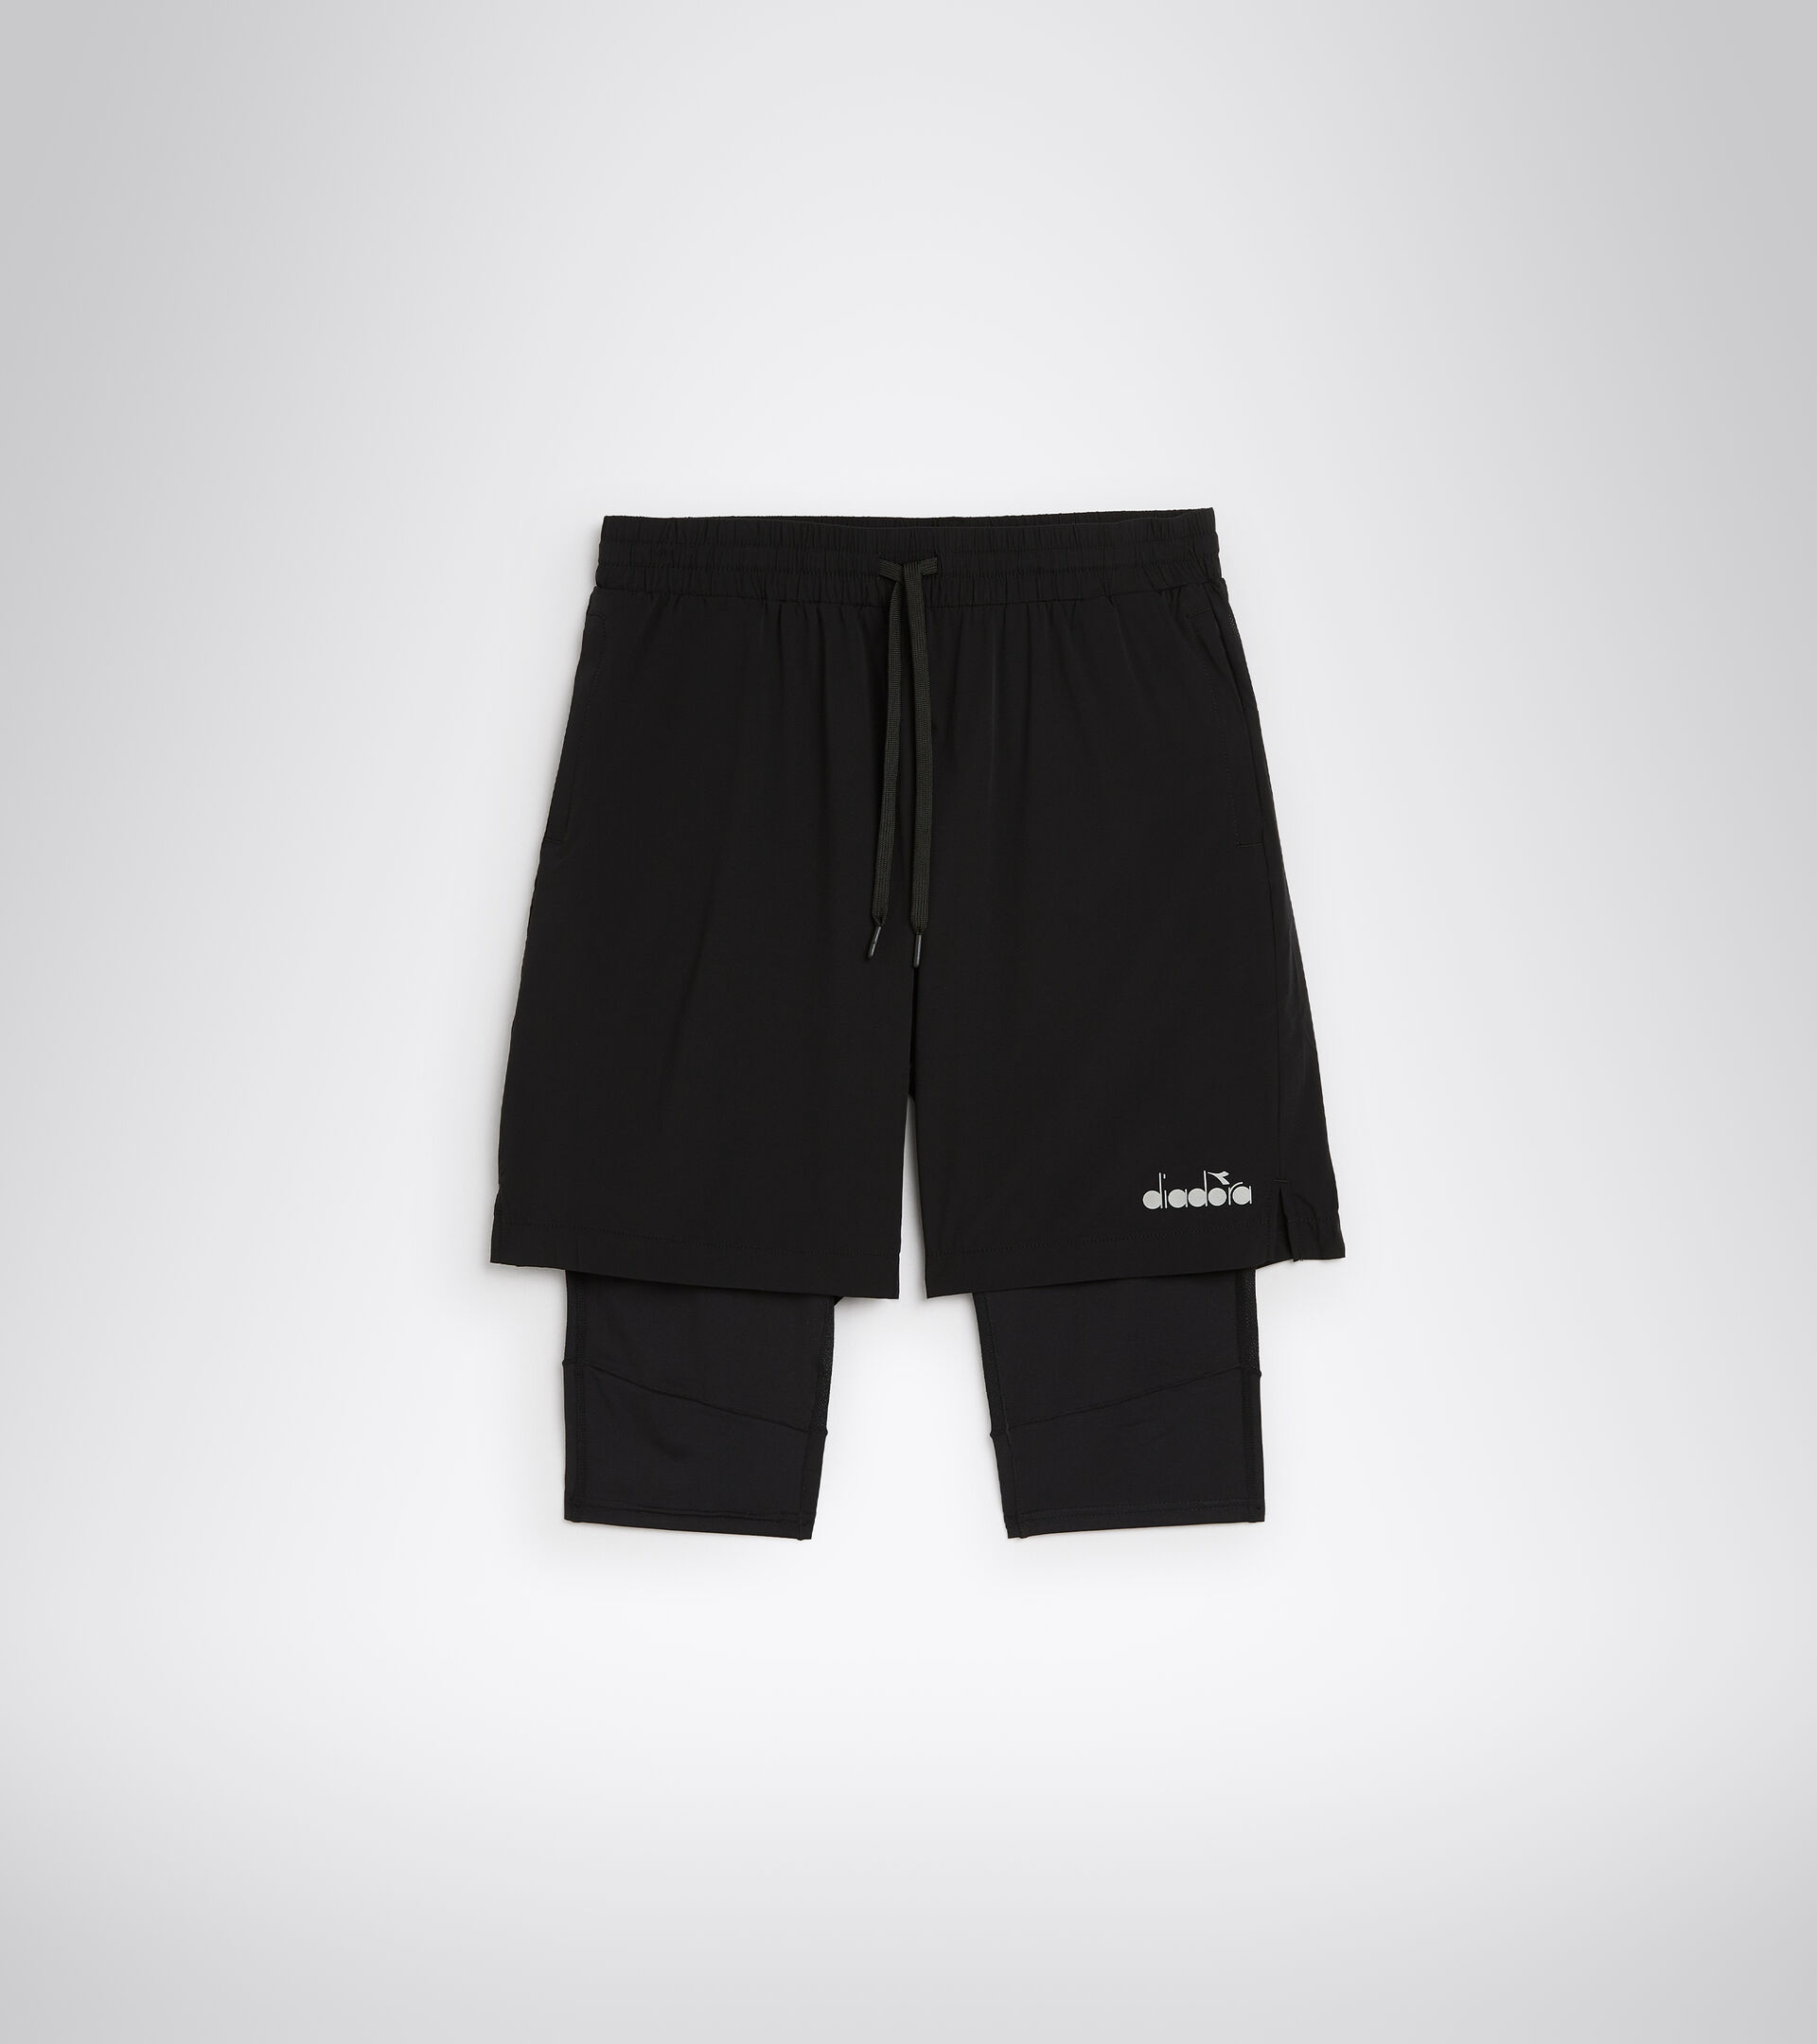 POWER SHORTS BE ONE Leggings with detachable shorts running set - Men -  Diadora Online Store GR